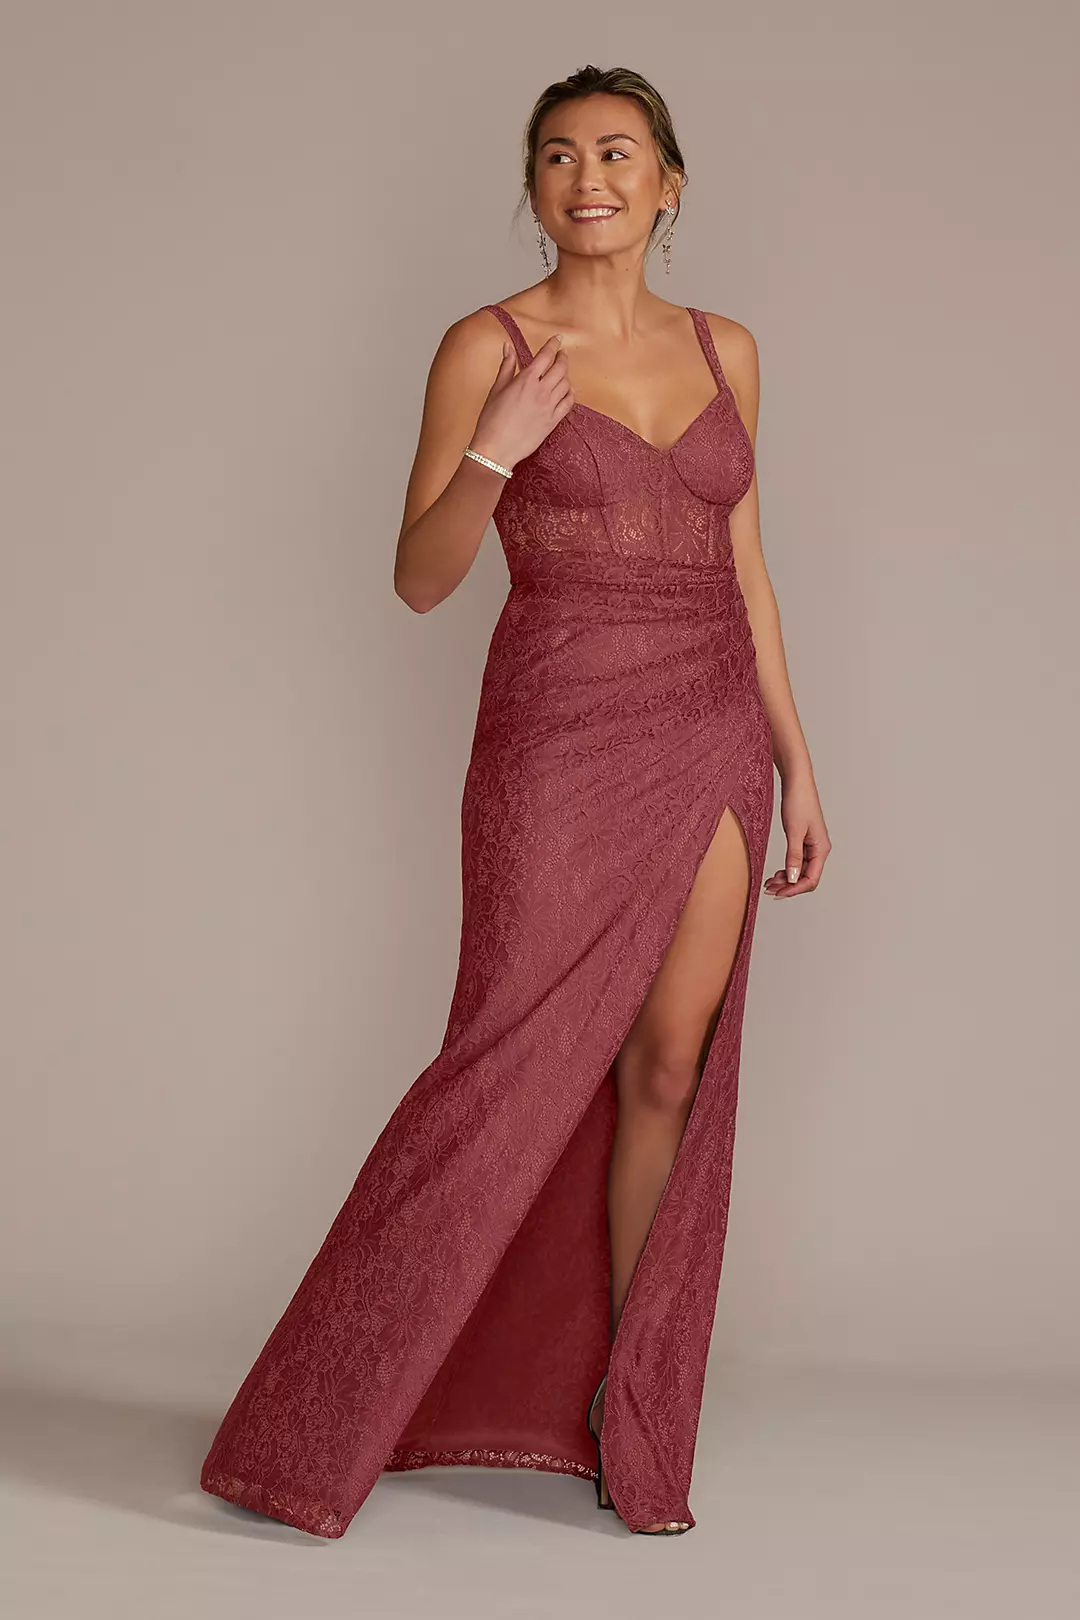 Lace Corset Bodice Dress with Slit Image